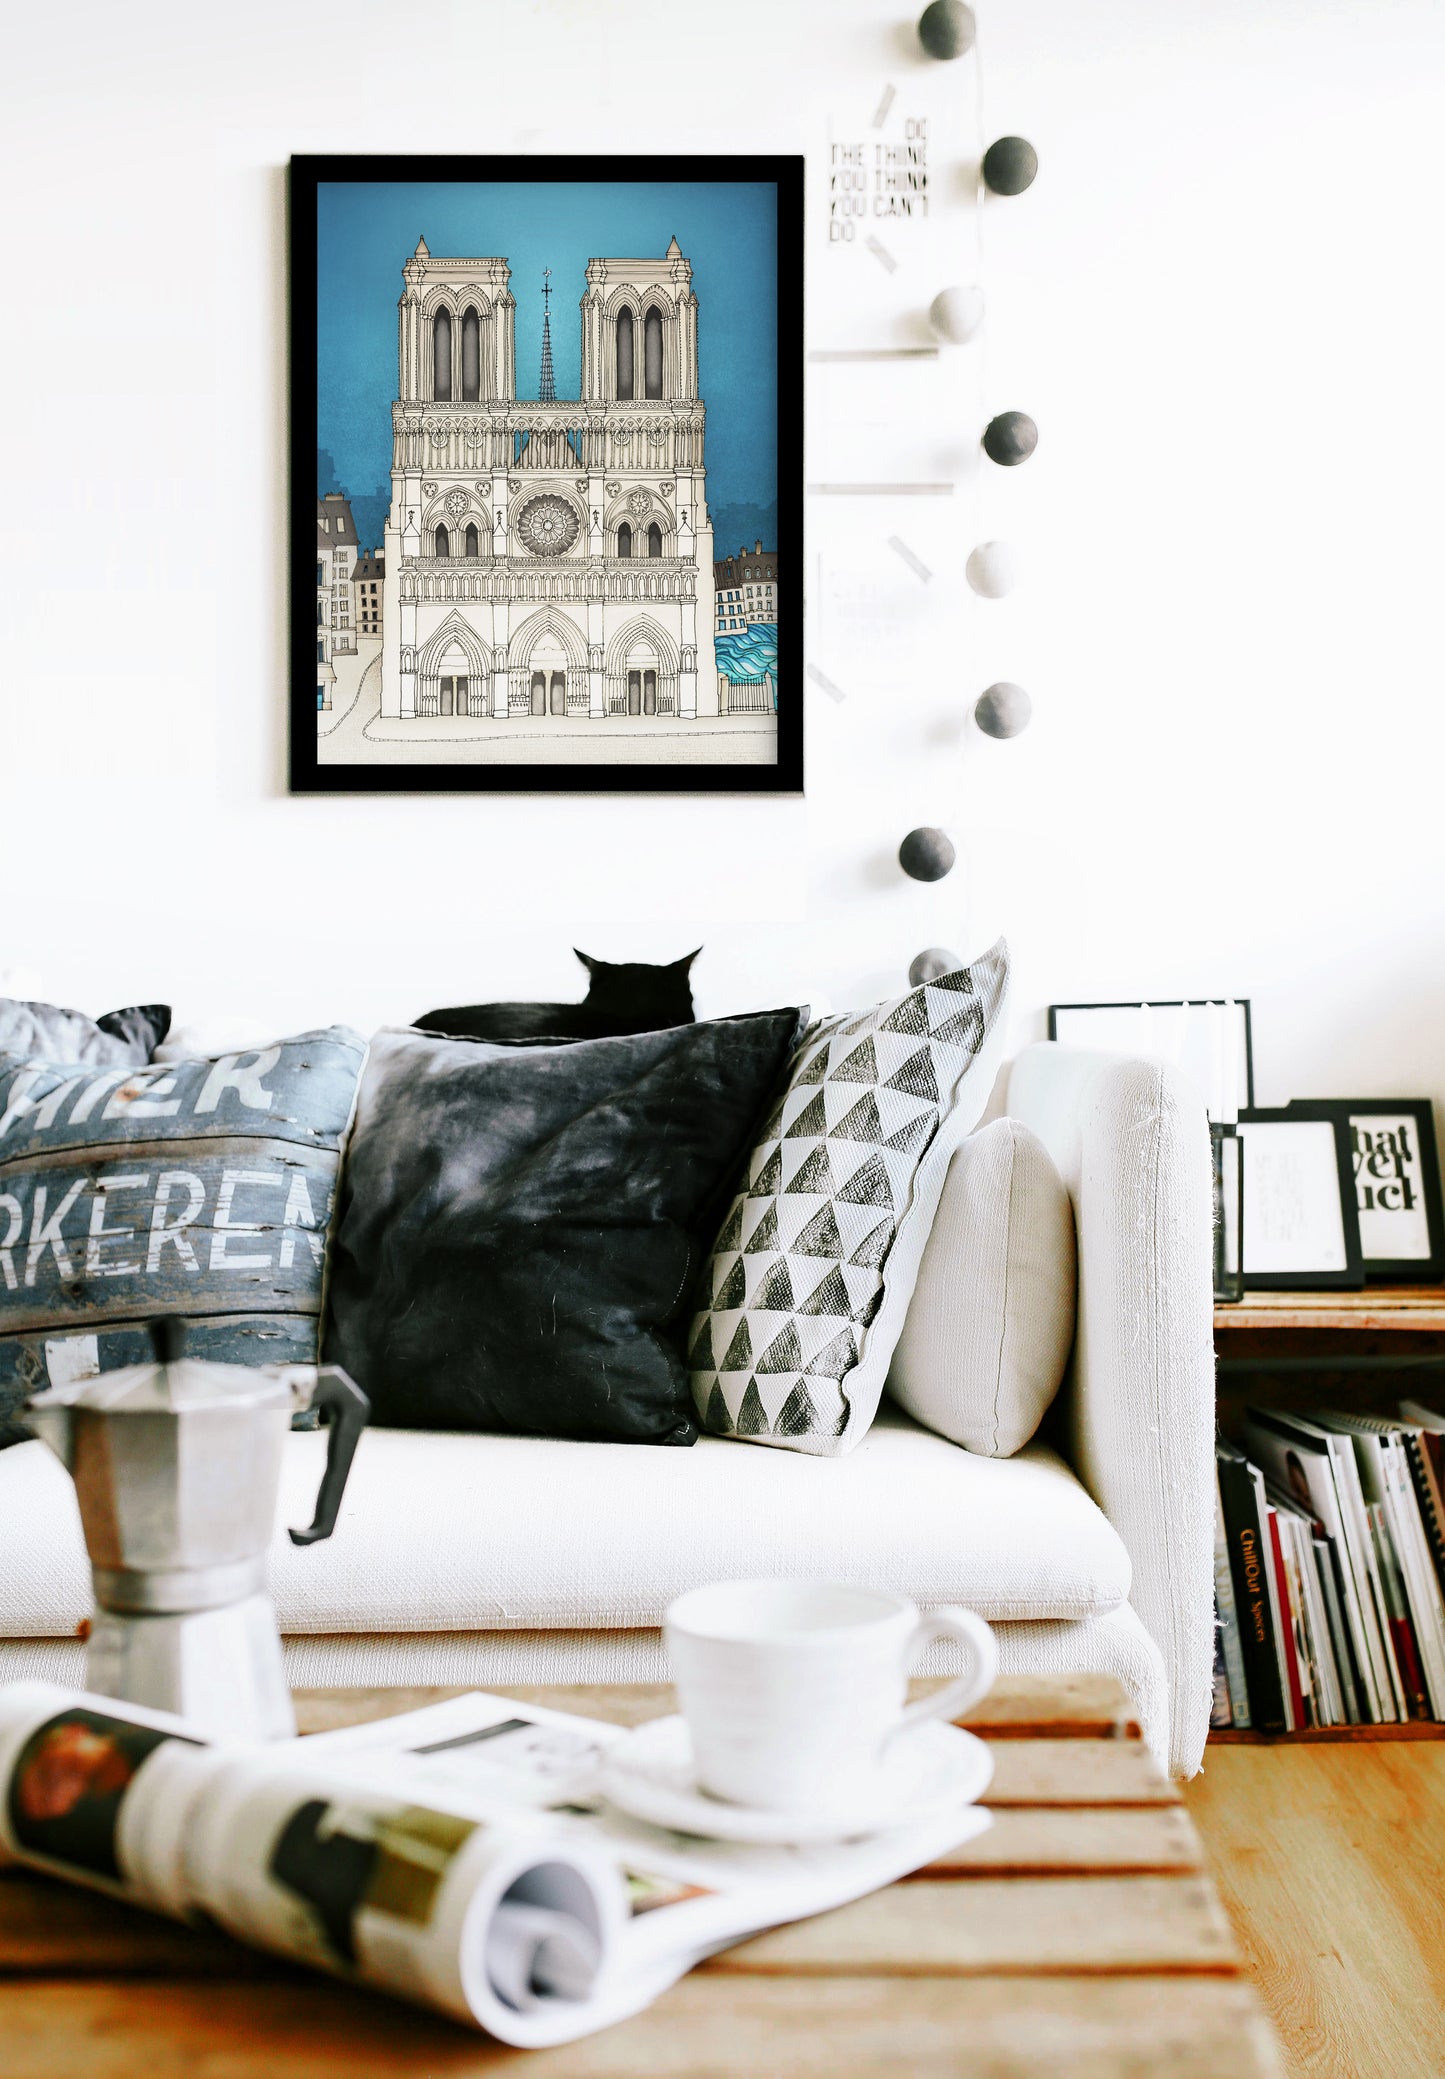 The Notre Dame in Paris (blue) - Framed Art Print